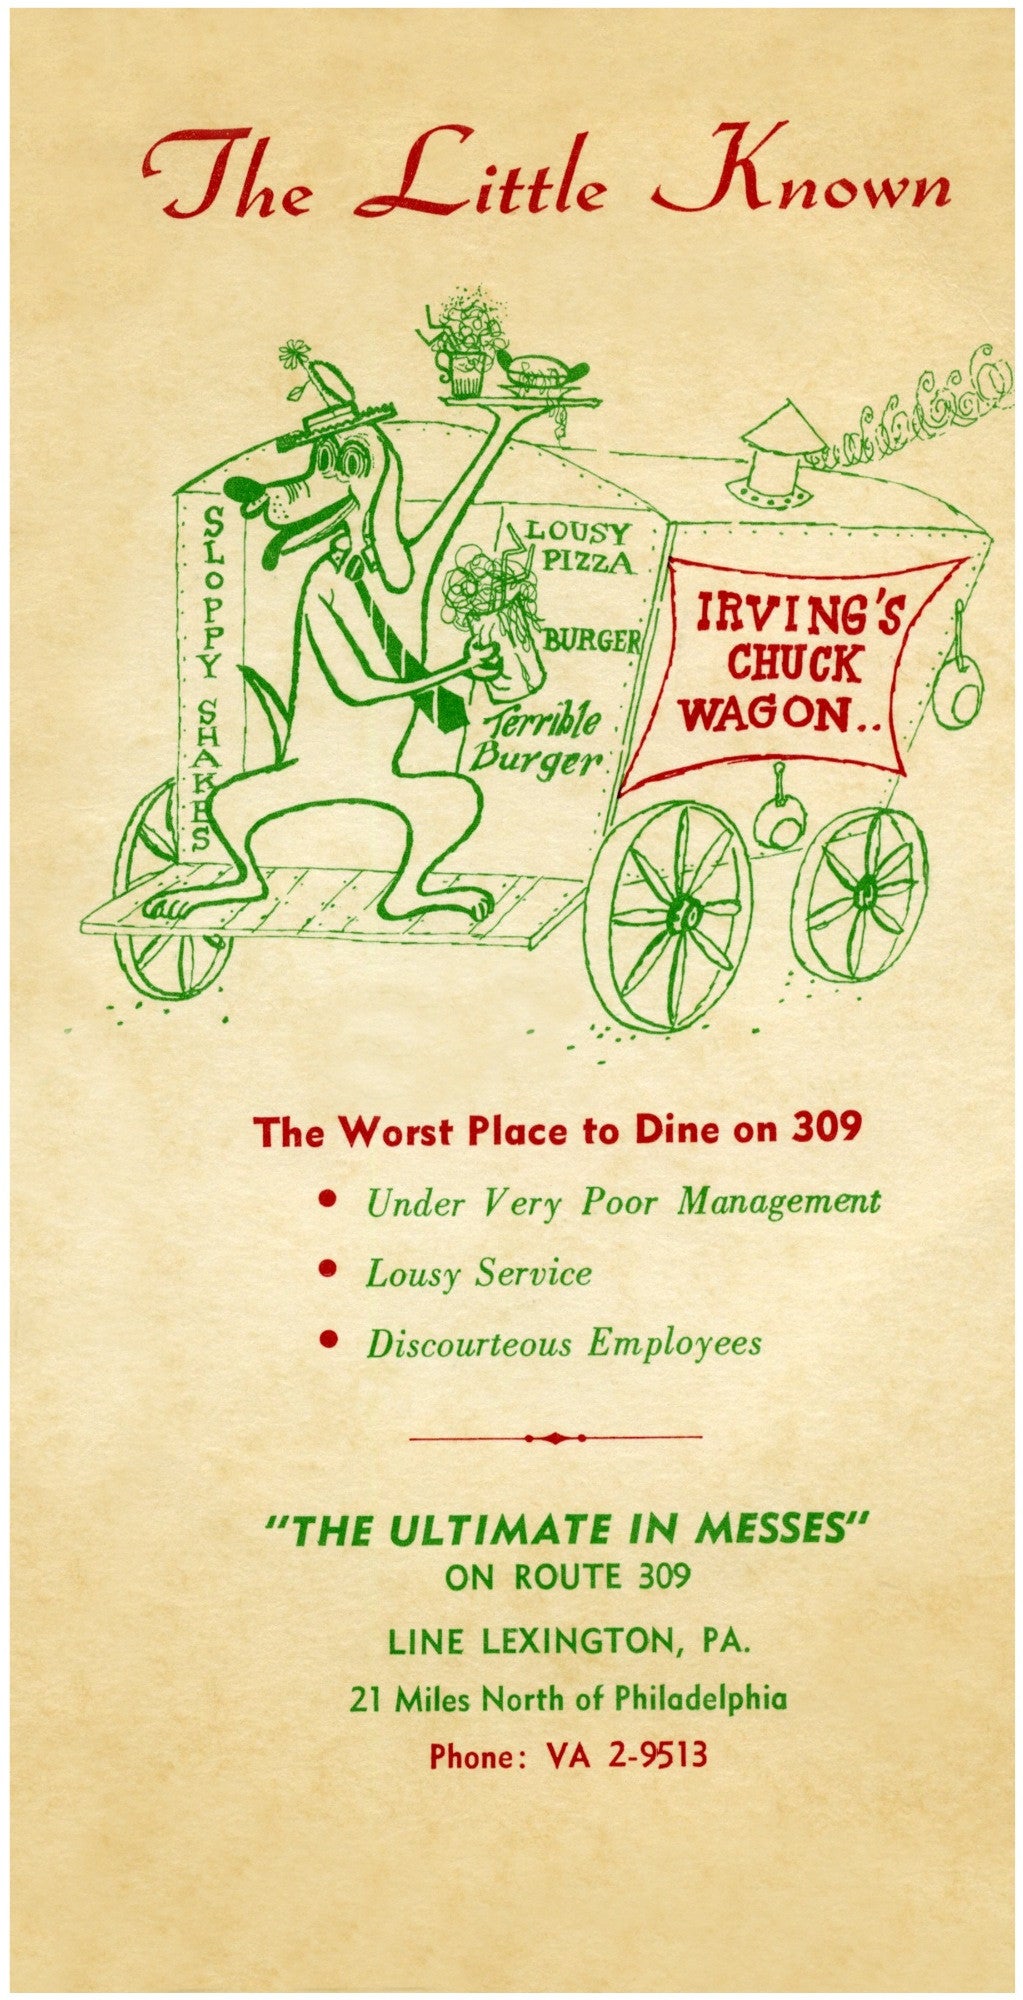 Irving's Chuck Wagon. Line Lexington, PA 1940s Menu Art